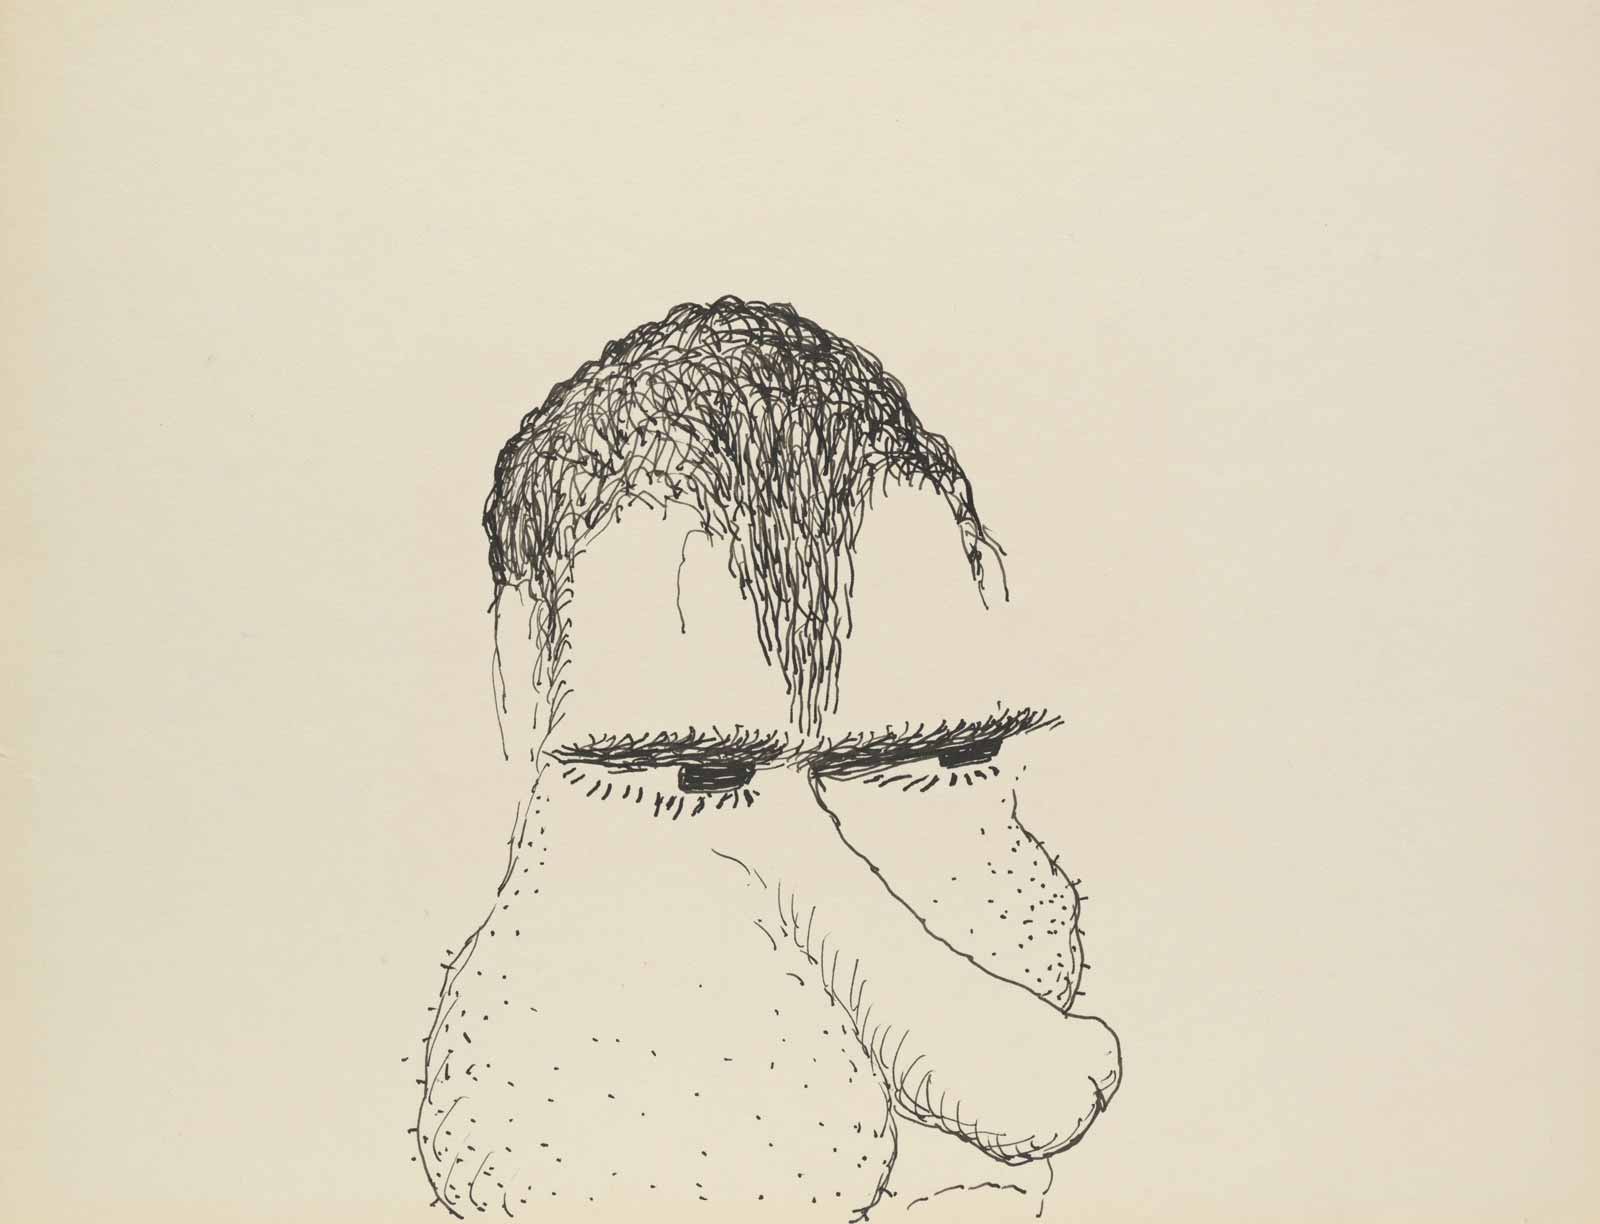 Philip Guston: Untitled (Poor Richard), 1971